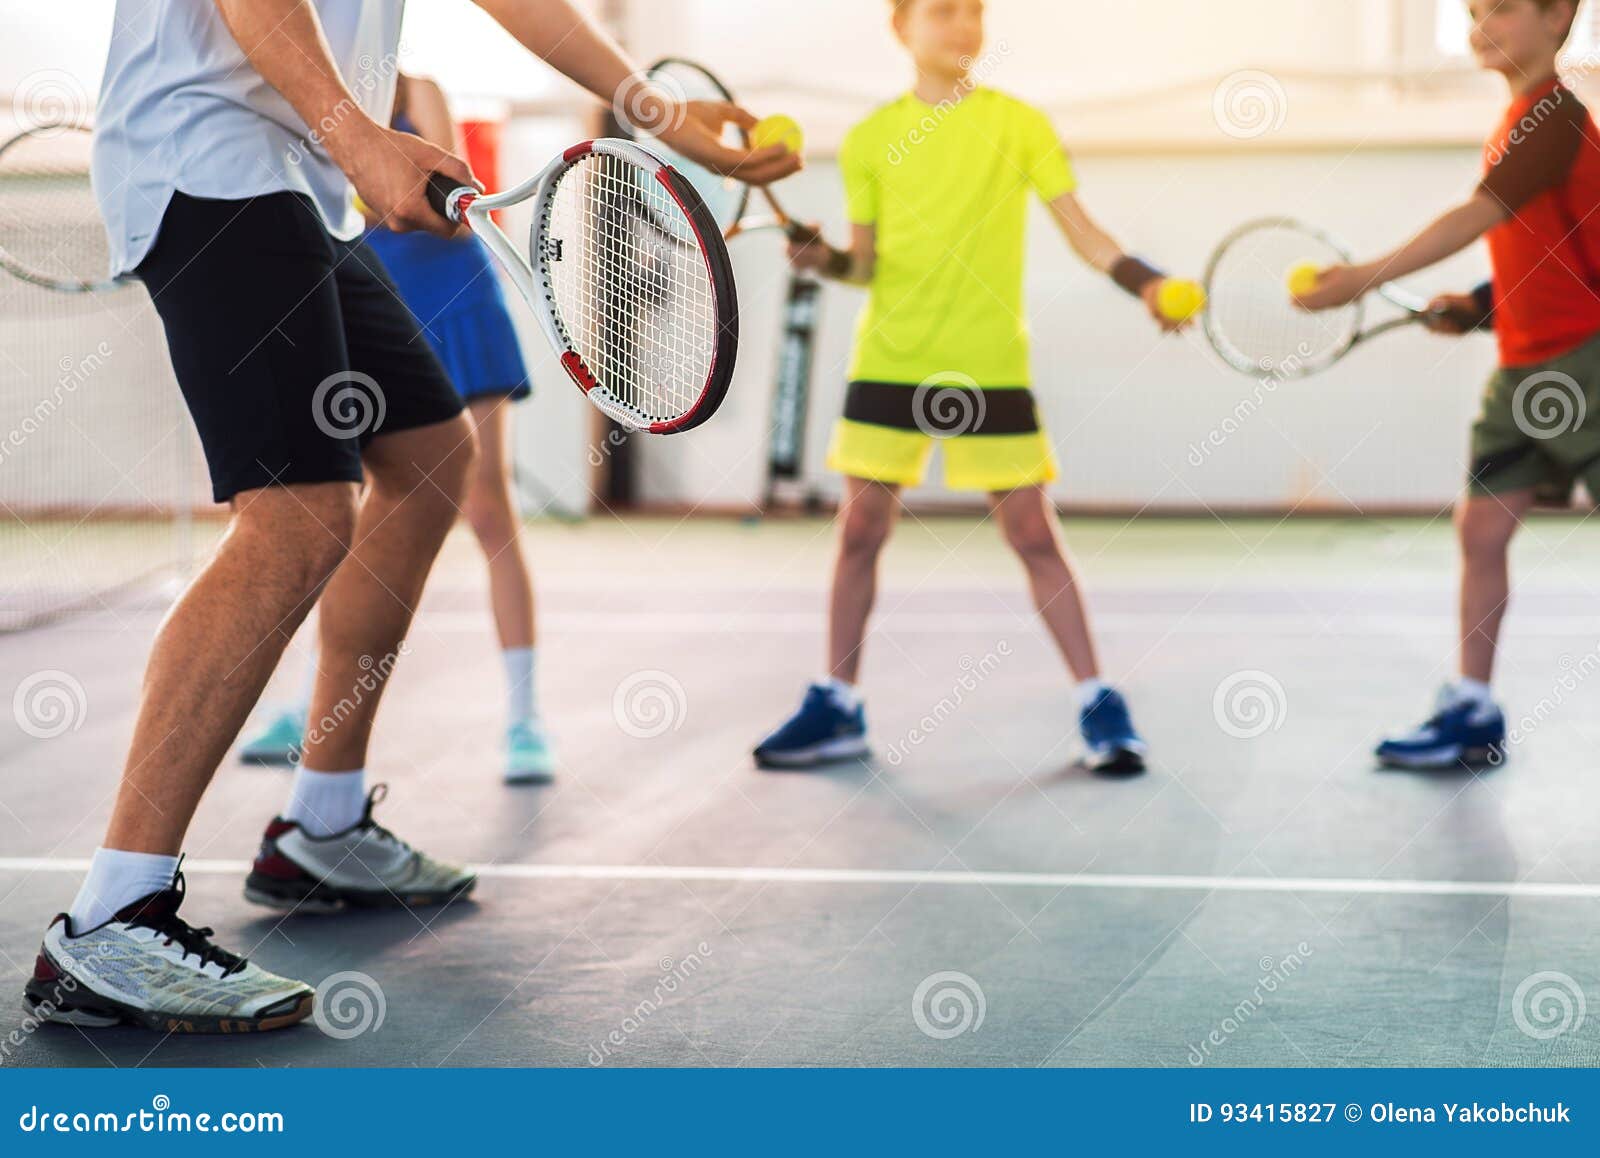 Professional Tennis Player Teaching Kids Stock Image